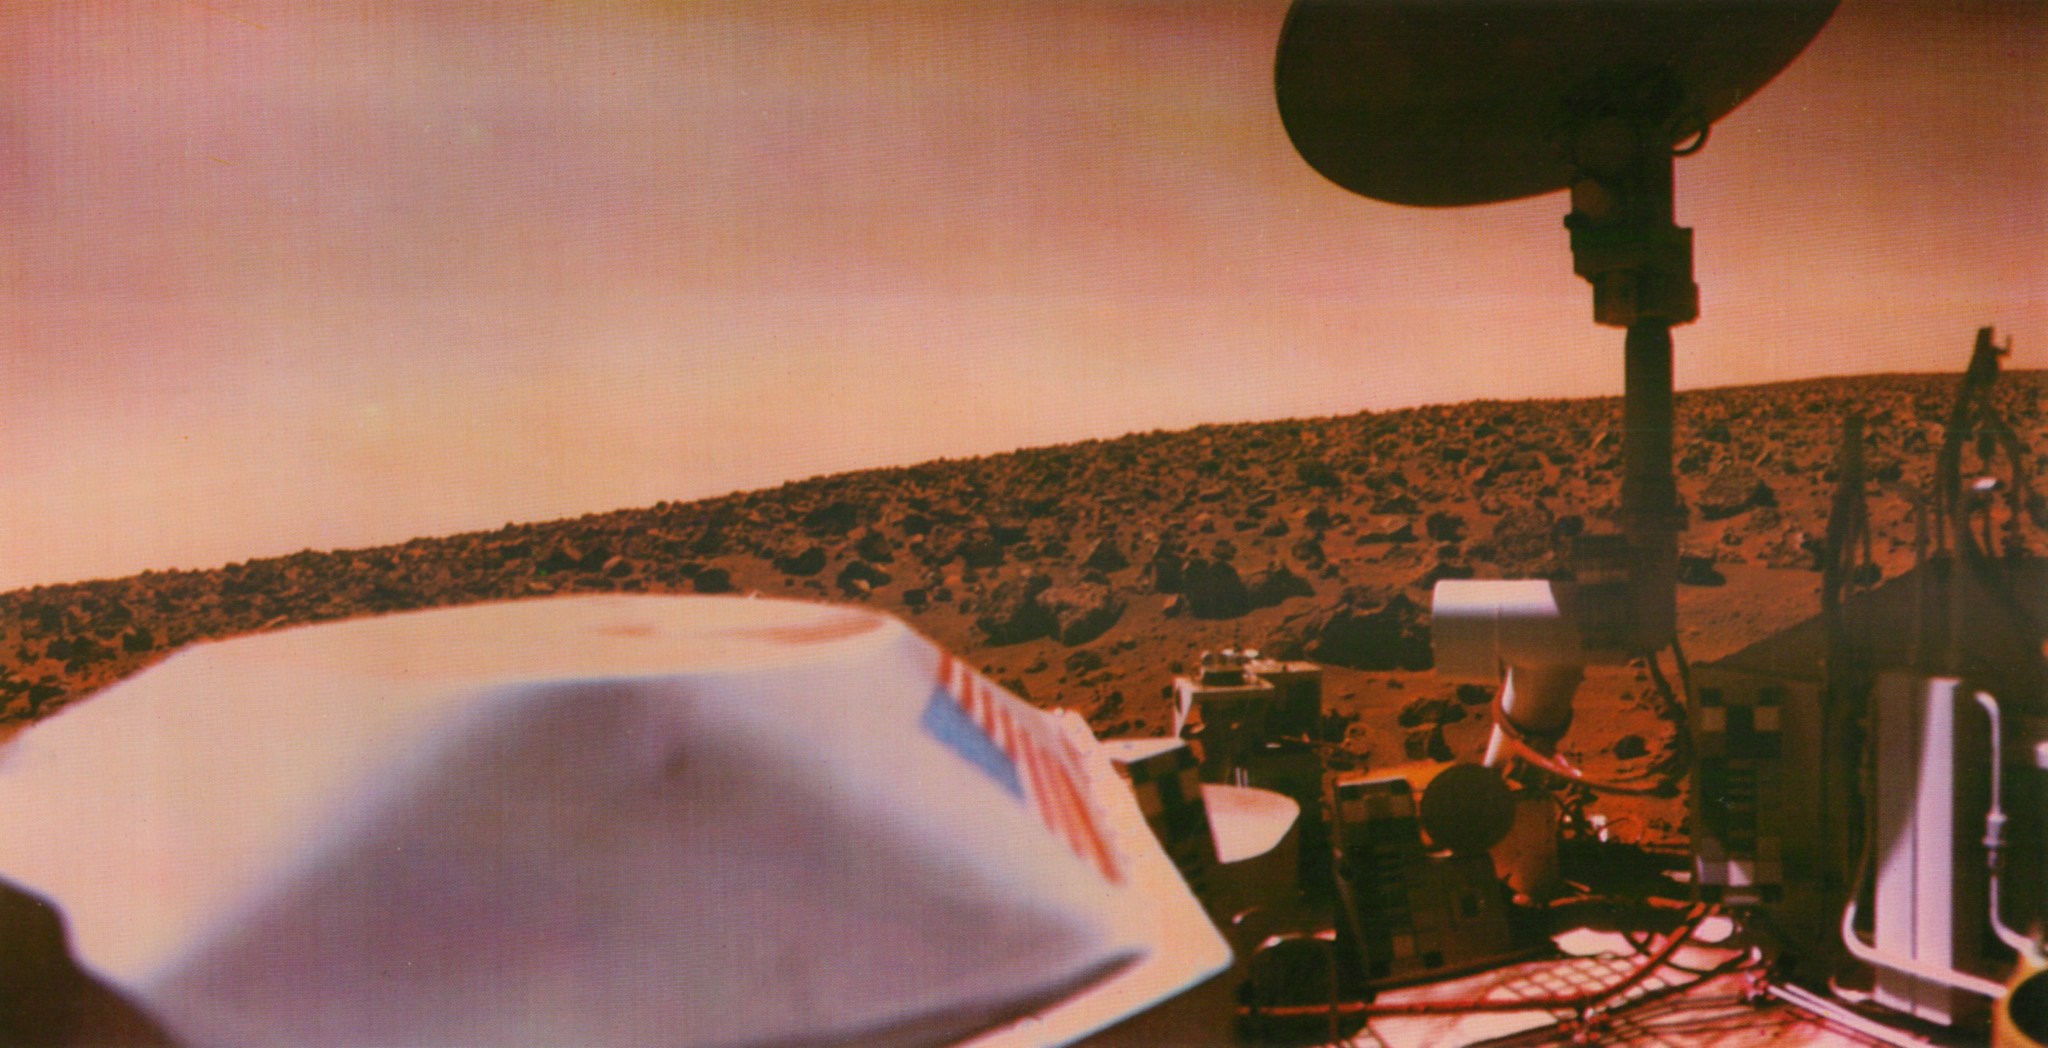 Viking 2 lander on surface of Mars, September 24, 1976